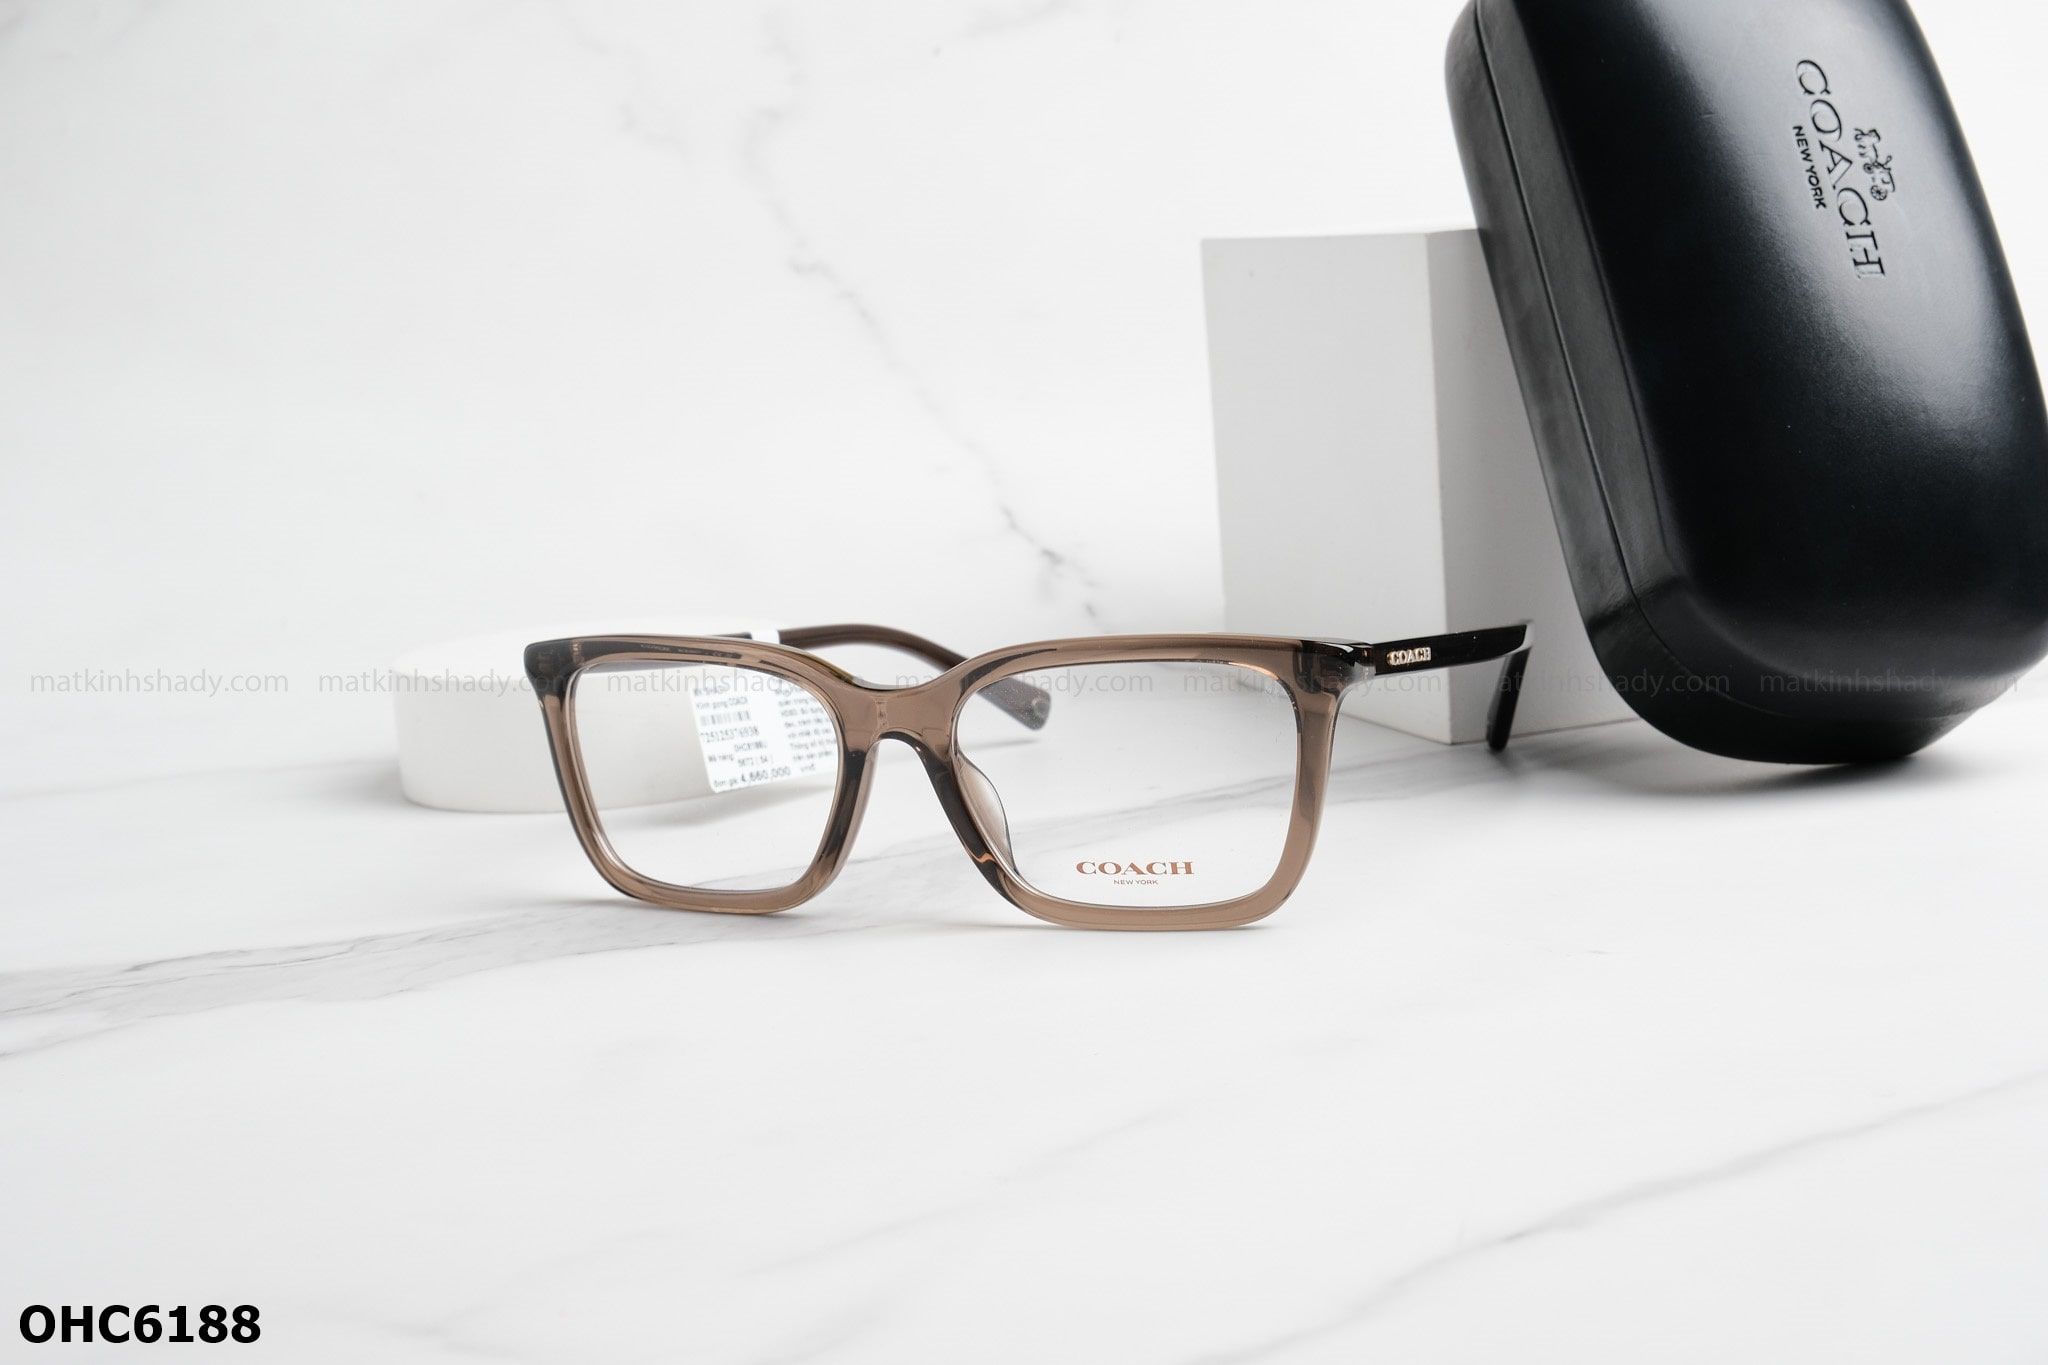  Coach Eyewear - Glasses - OHC6188 